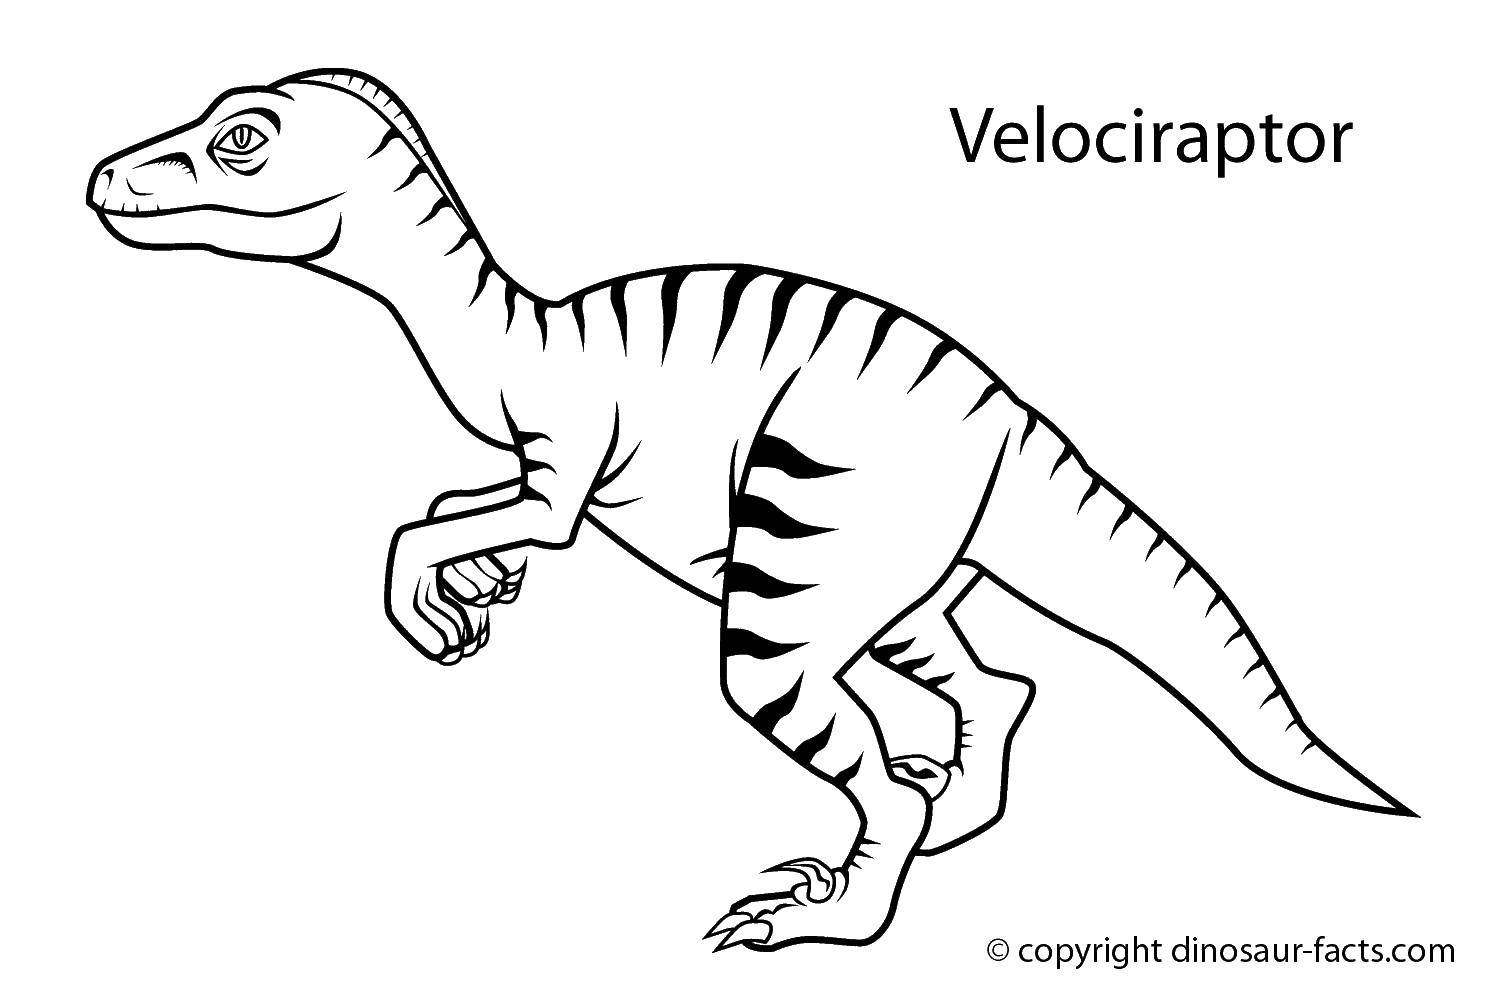 Название: Раскраска Велоцираптор. Категория: динозавр. Теги: Велоцираптор, динозавр.